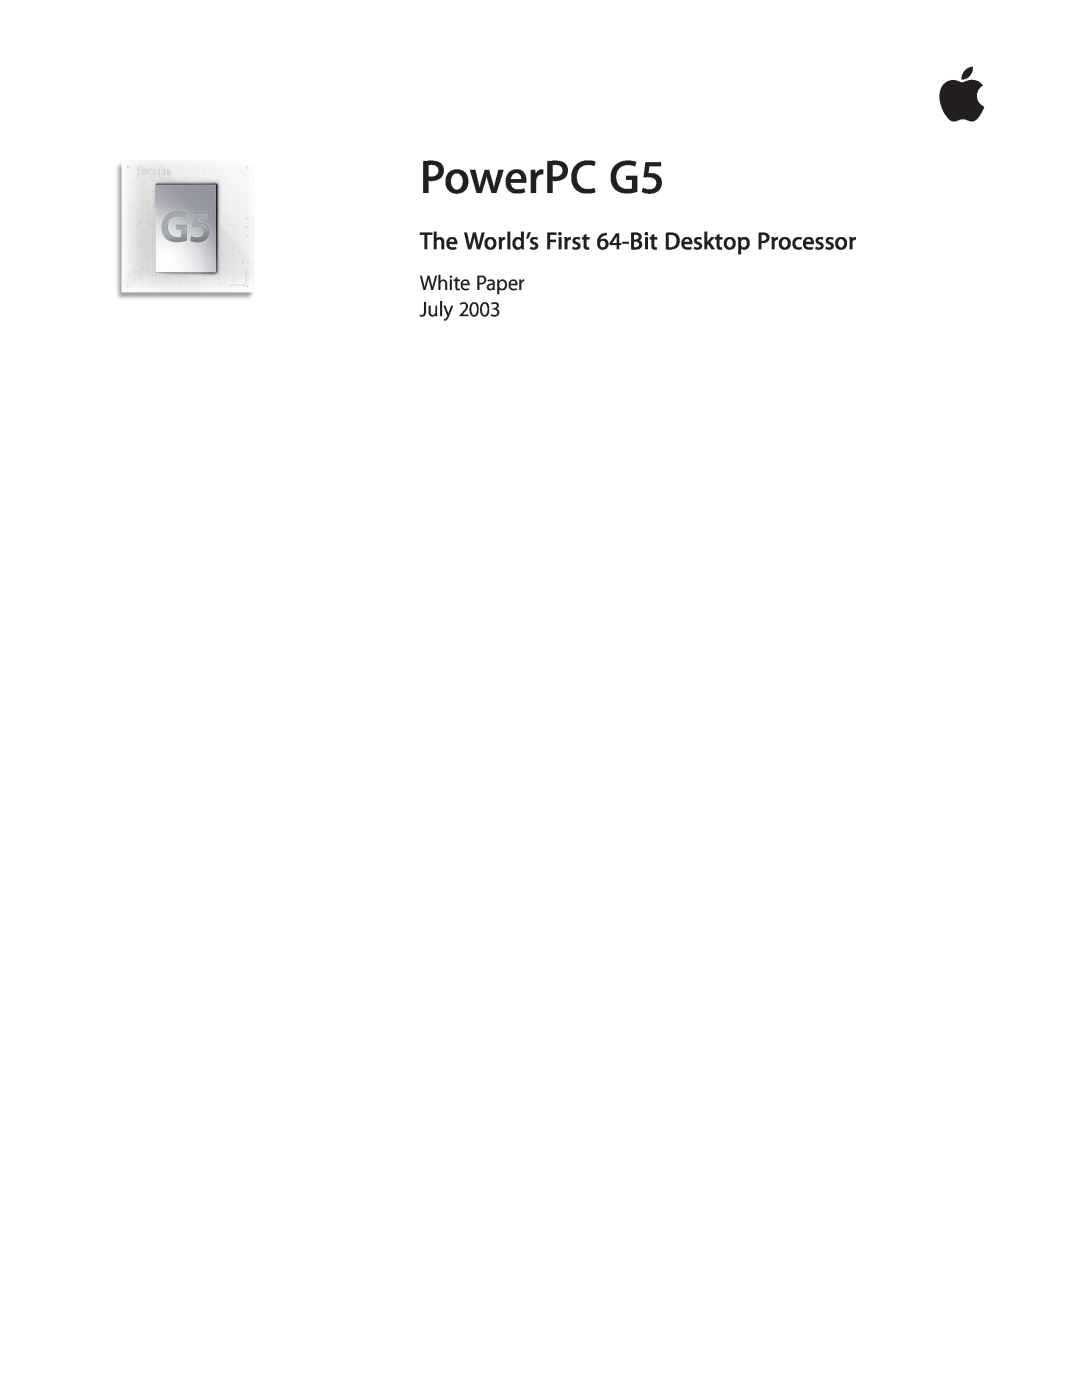 Apple PowerPC G5 manual White Paper July, The World’s First 64-Bit Desktop Processor 